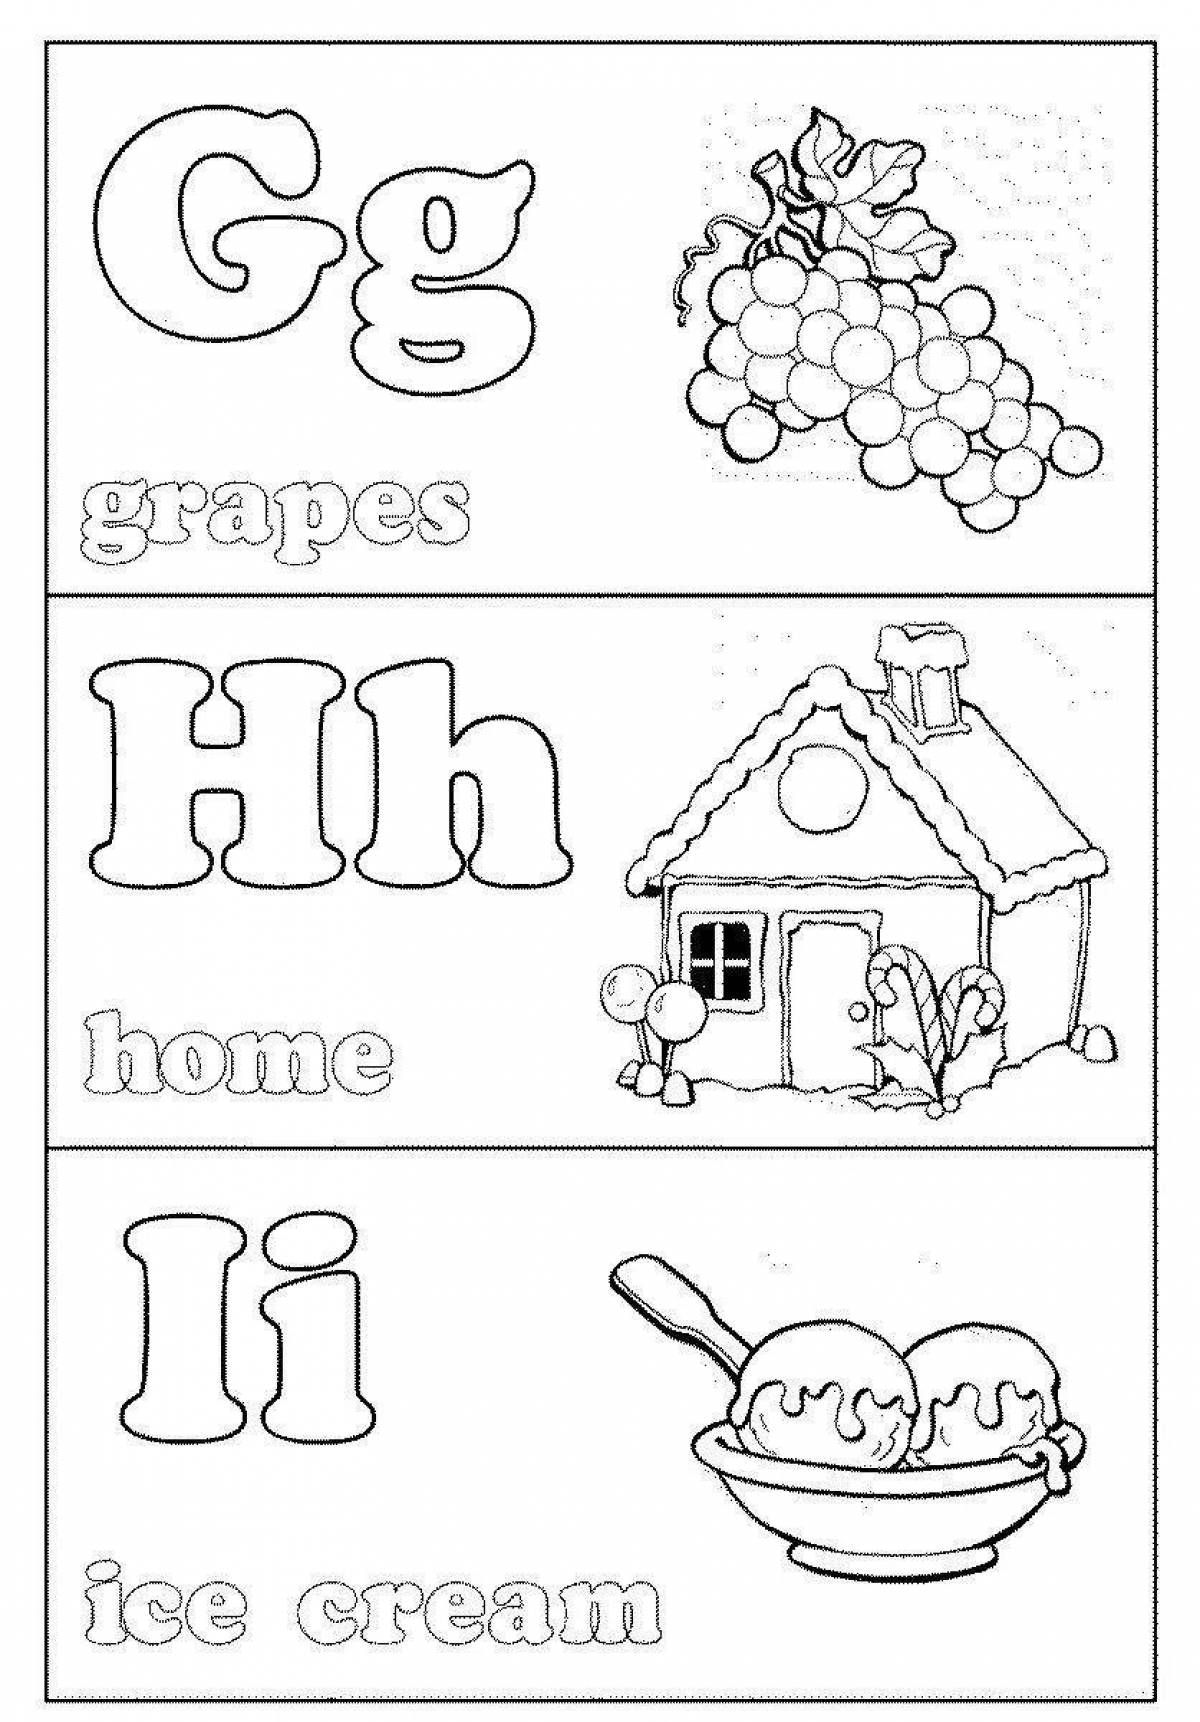 Inspirational english alphabet coloring book